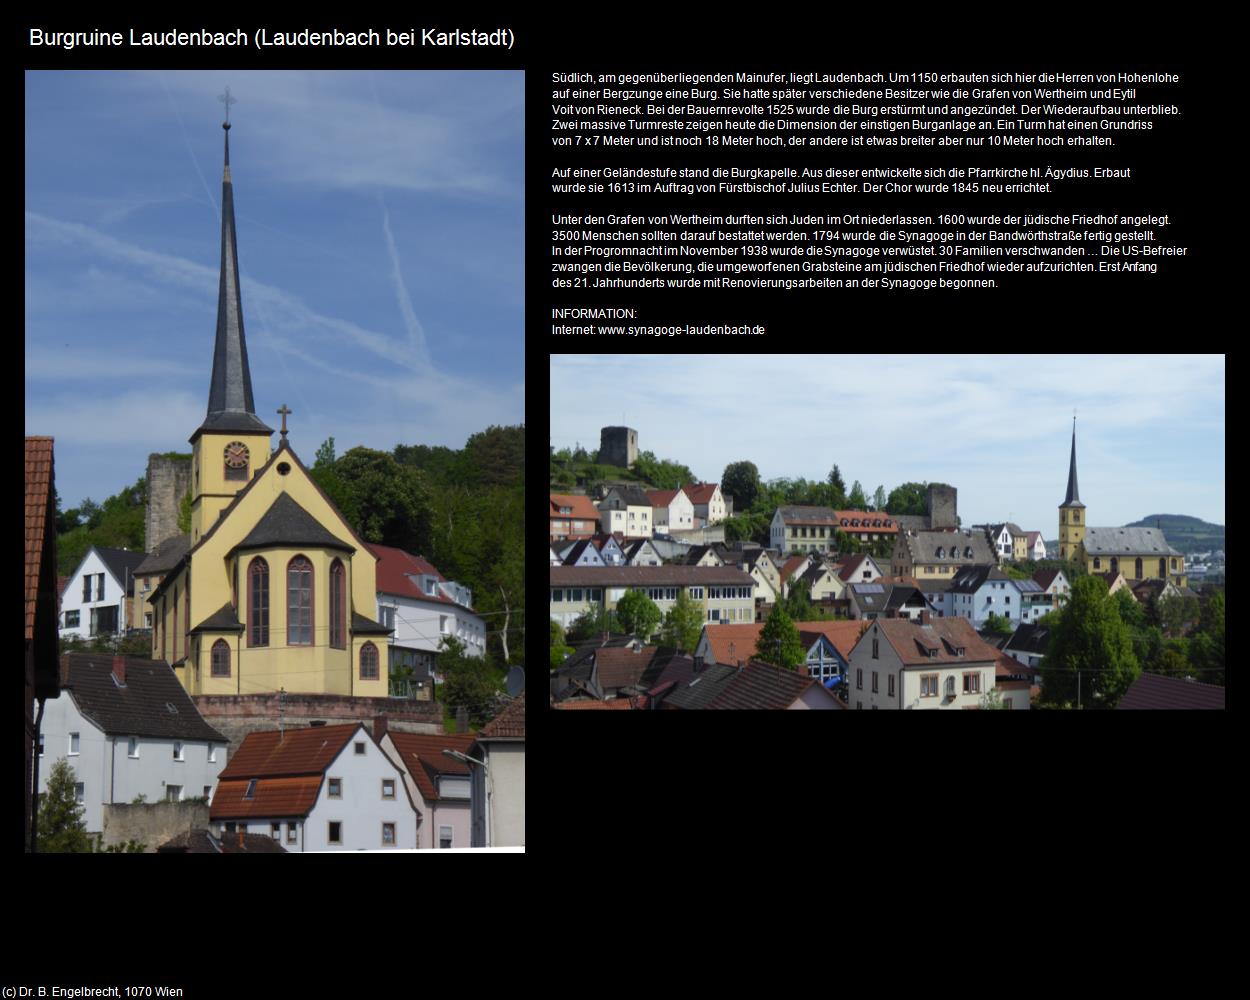 Burgruine Laudenbach (Laudenbach)  (Karlstadt) in Kulturatlas-BAYERN